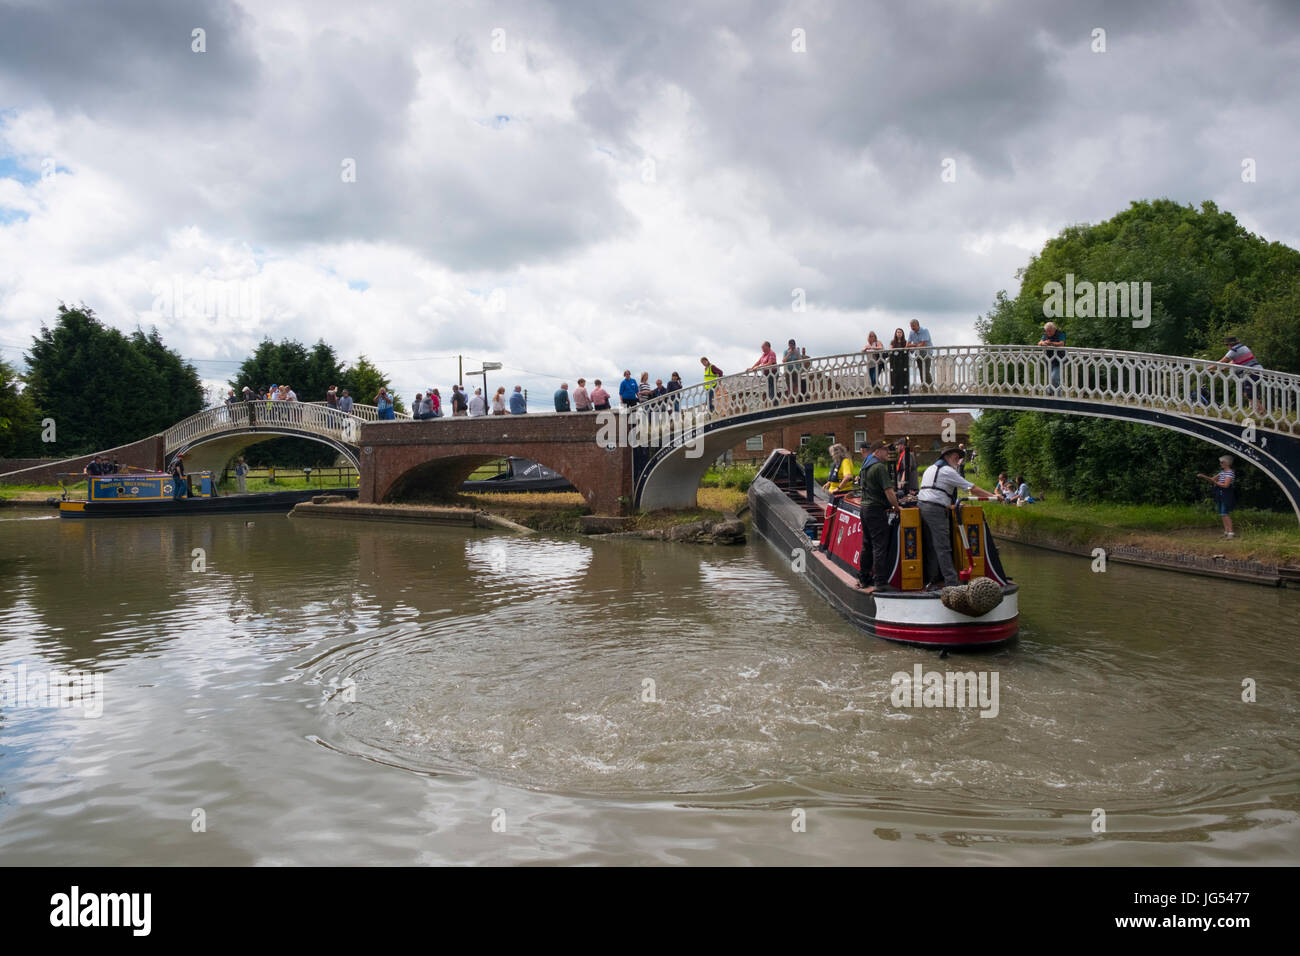 Historic narrowboat rally at Braunston Marina, Braunston, Northamptonshire Stock Photo